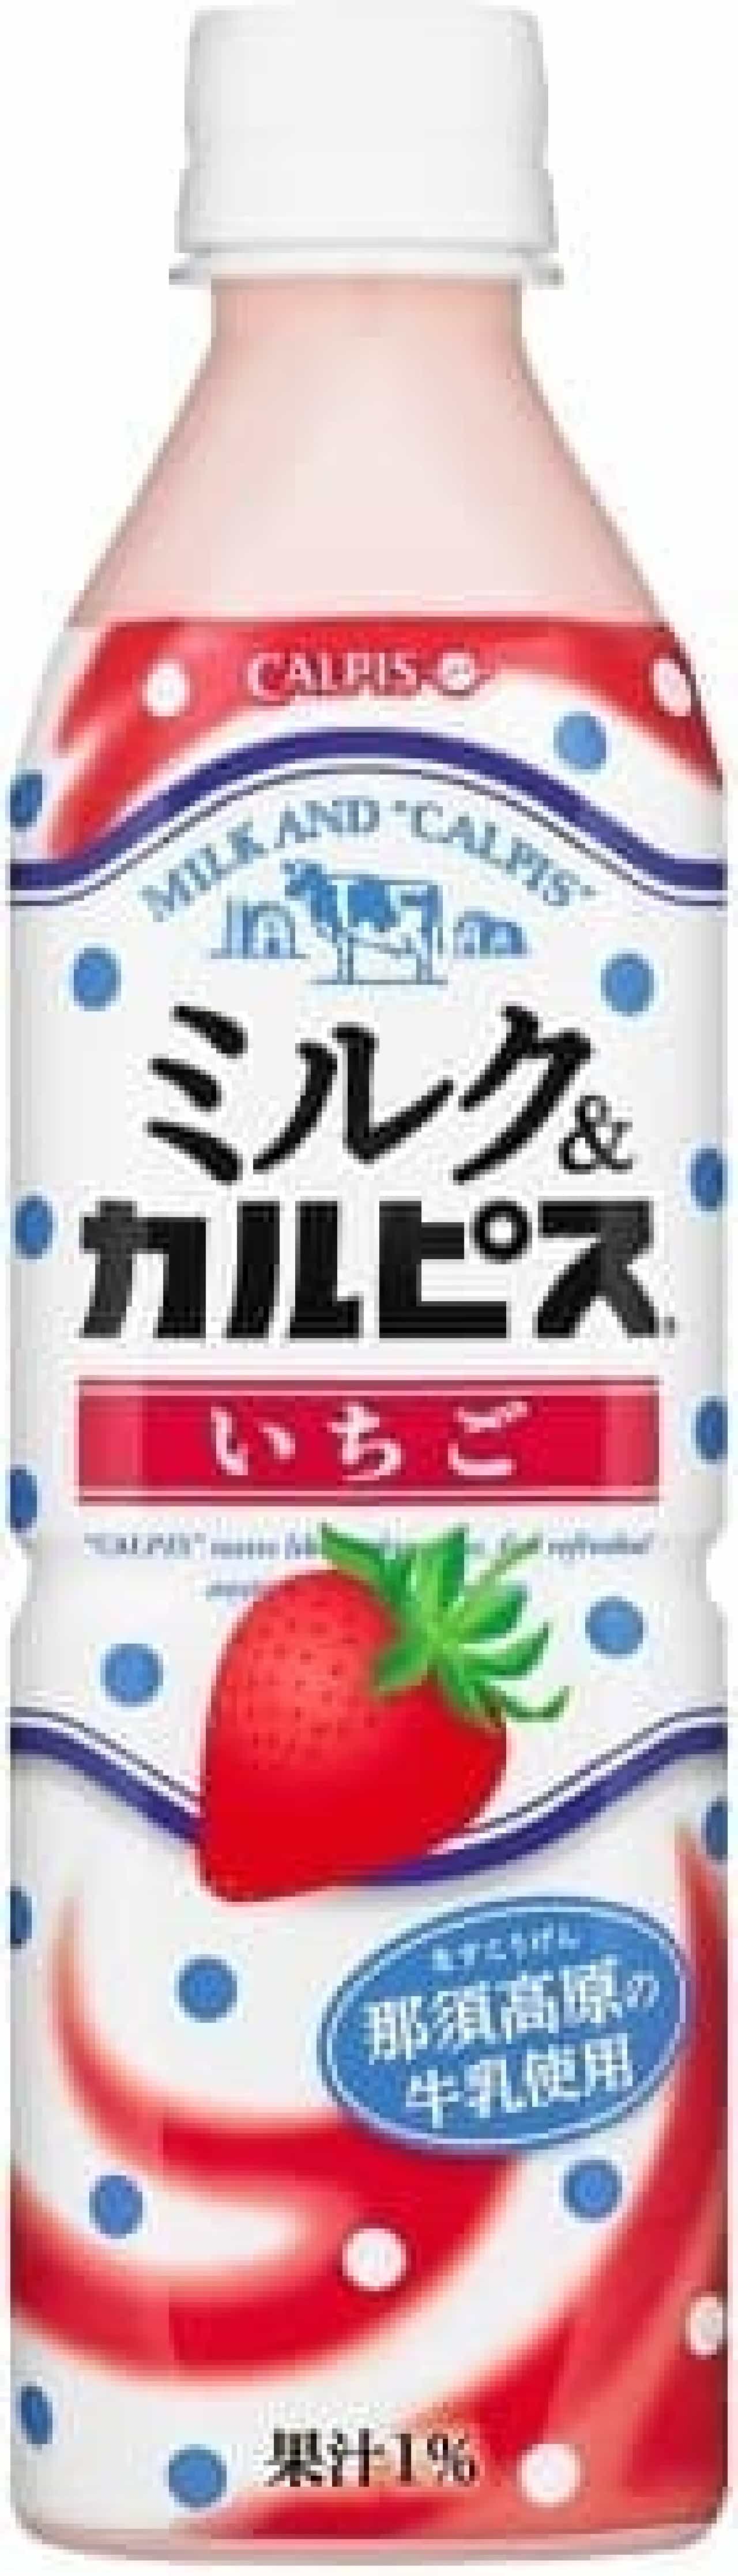 Asahi Soft Drinks "Milk &'Calpis' Strawberries"